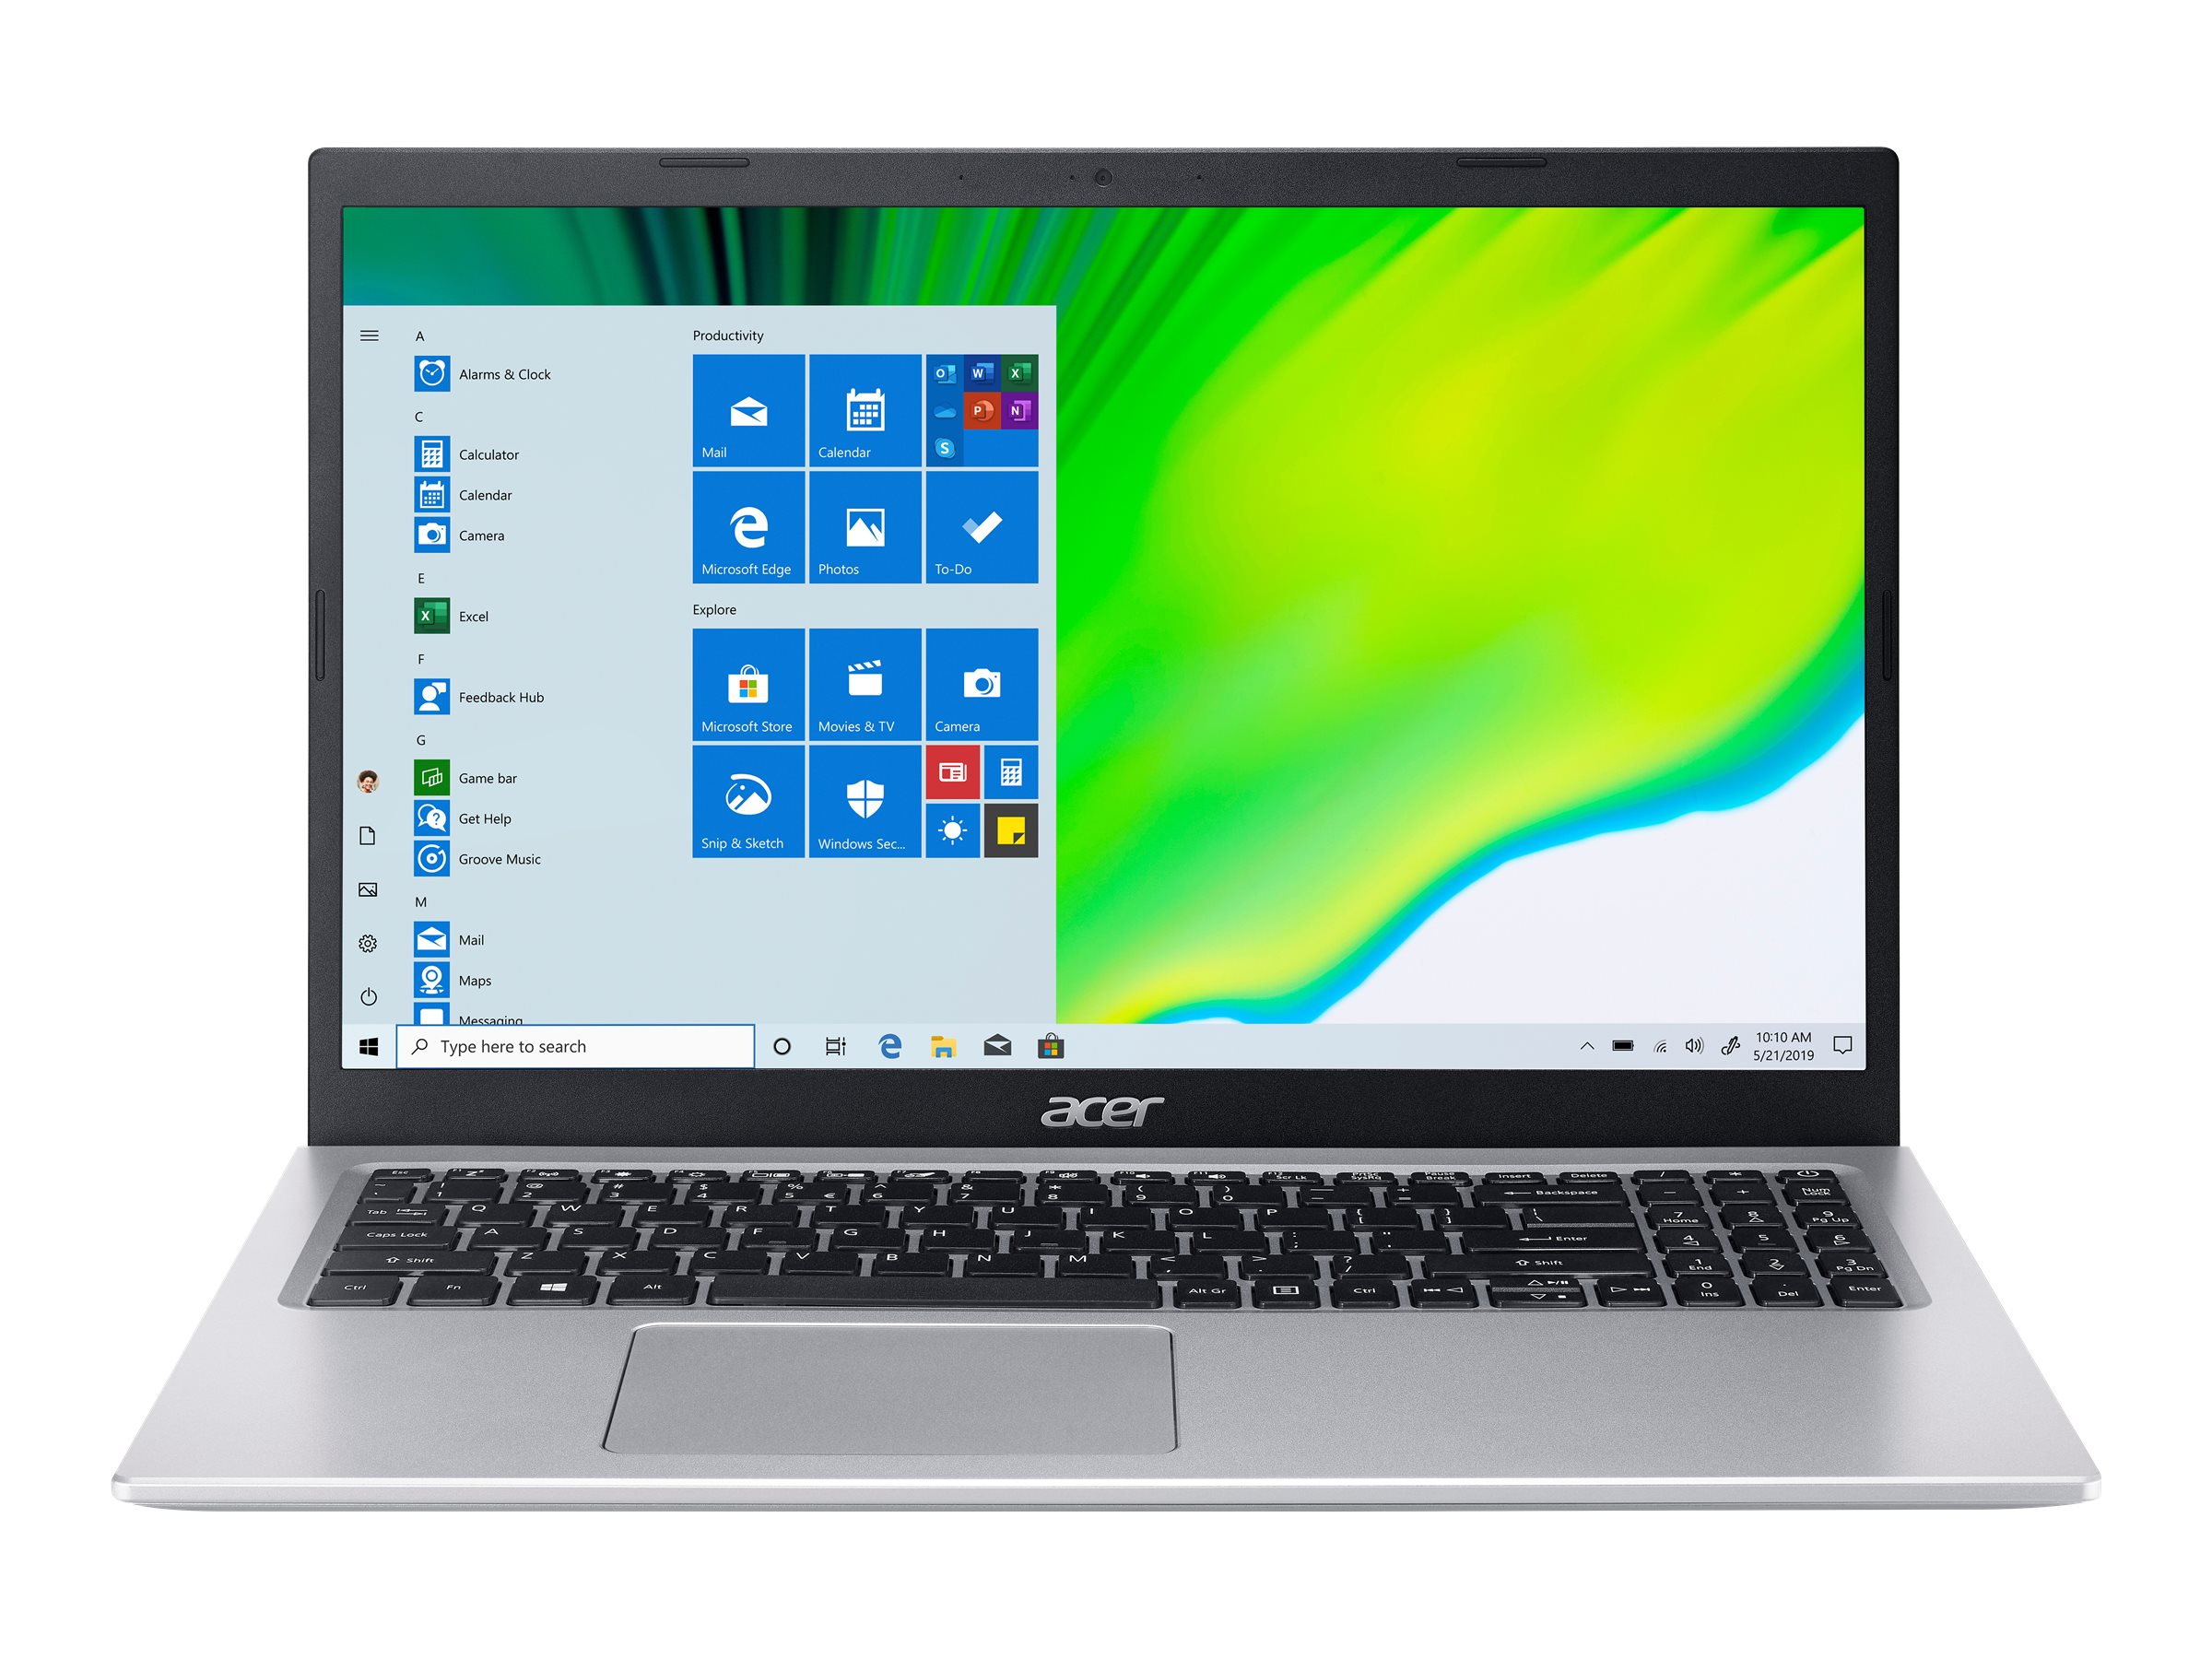 Acer Aspire 5 A515-56-36UT Slim Laptop | 15.6" Full HD Display | 11th Gen Intel Core i3-1115G4 Processor | 4GB DDR4 | 128GB NVMe SSD | WiFi 6 | Amazon Alexa | Windows 10 Home (S Mode) - image 2 of 8